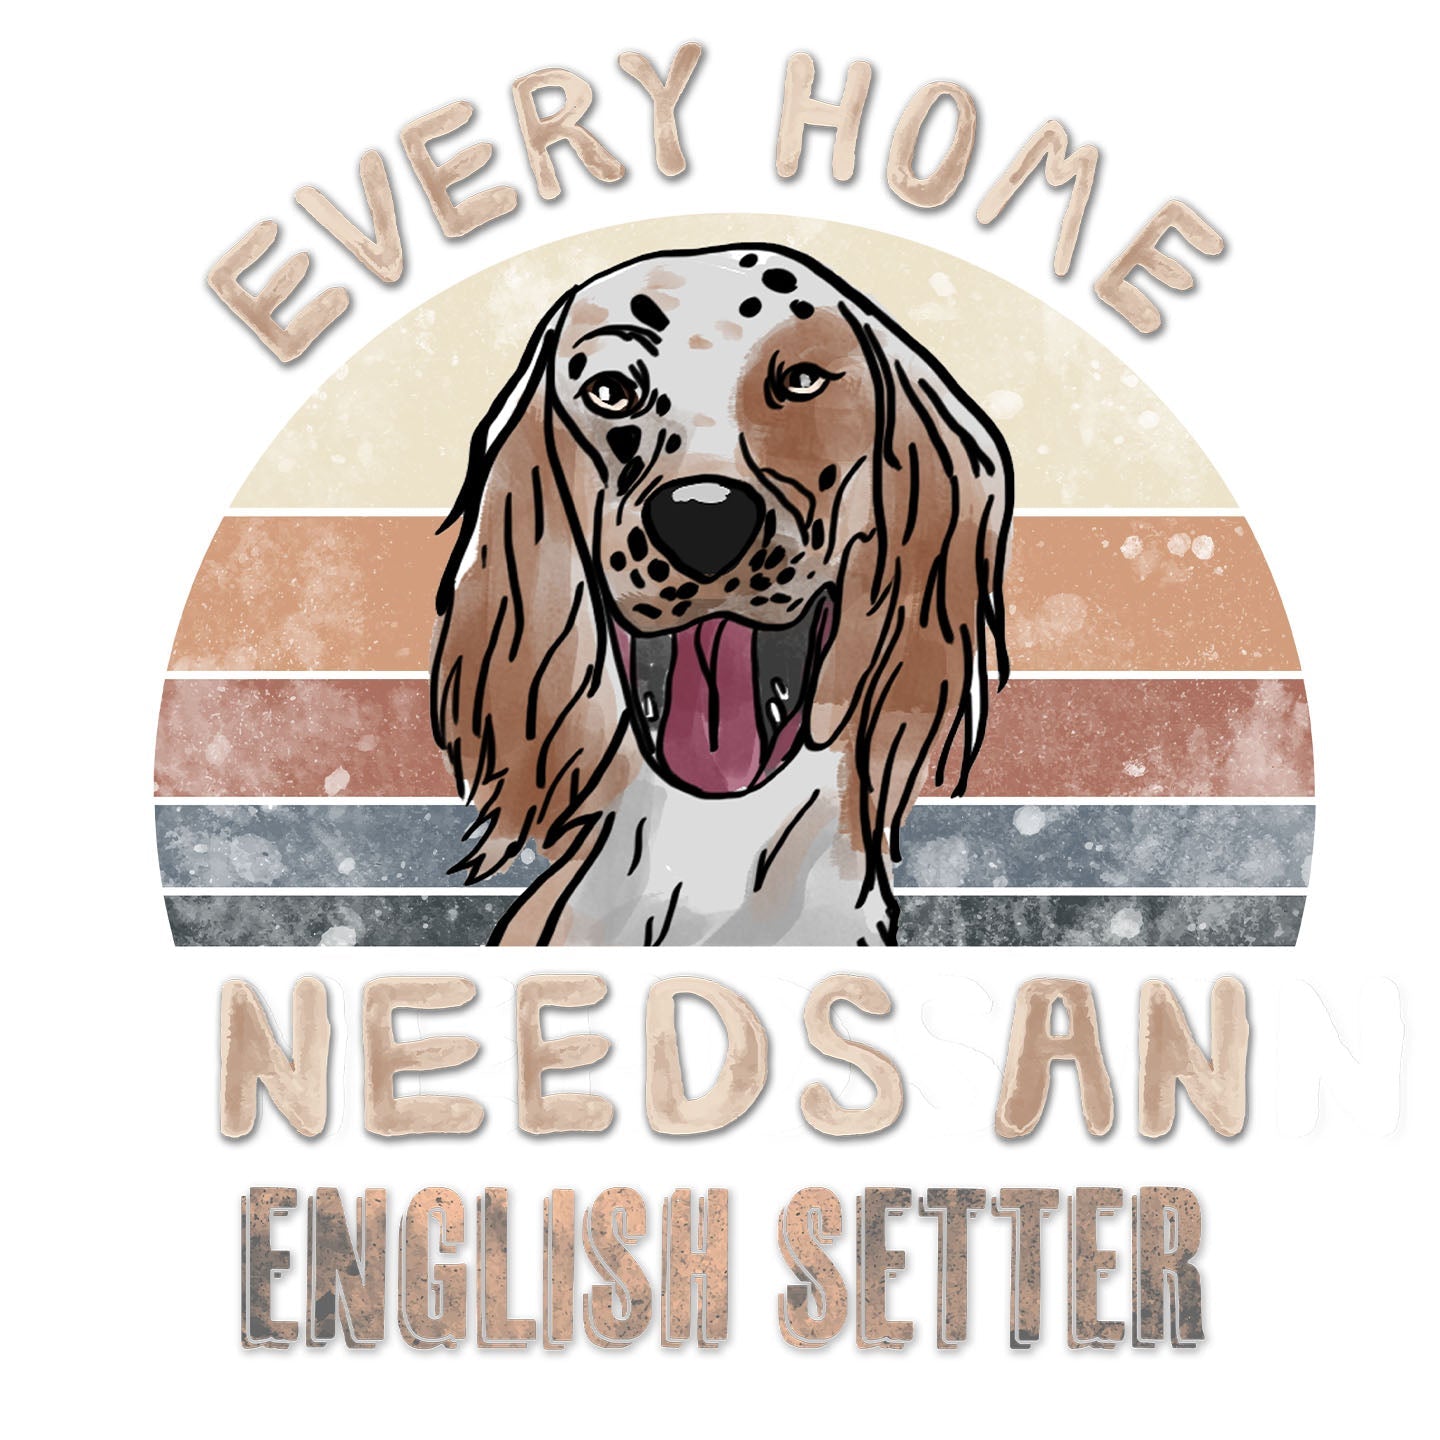 Every Home Needs a English Setter - Women's V-Neck T-Shirt